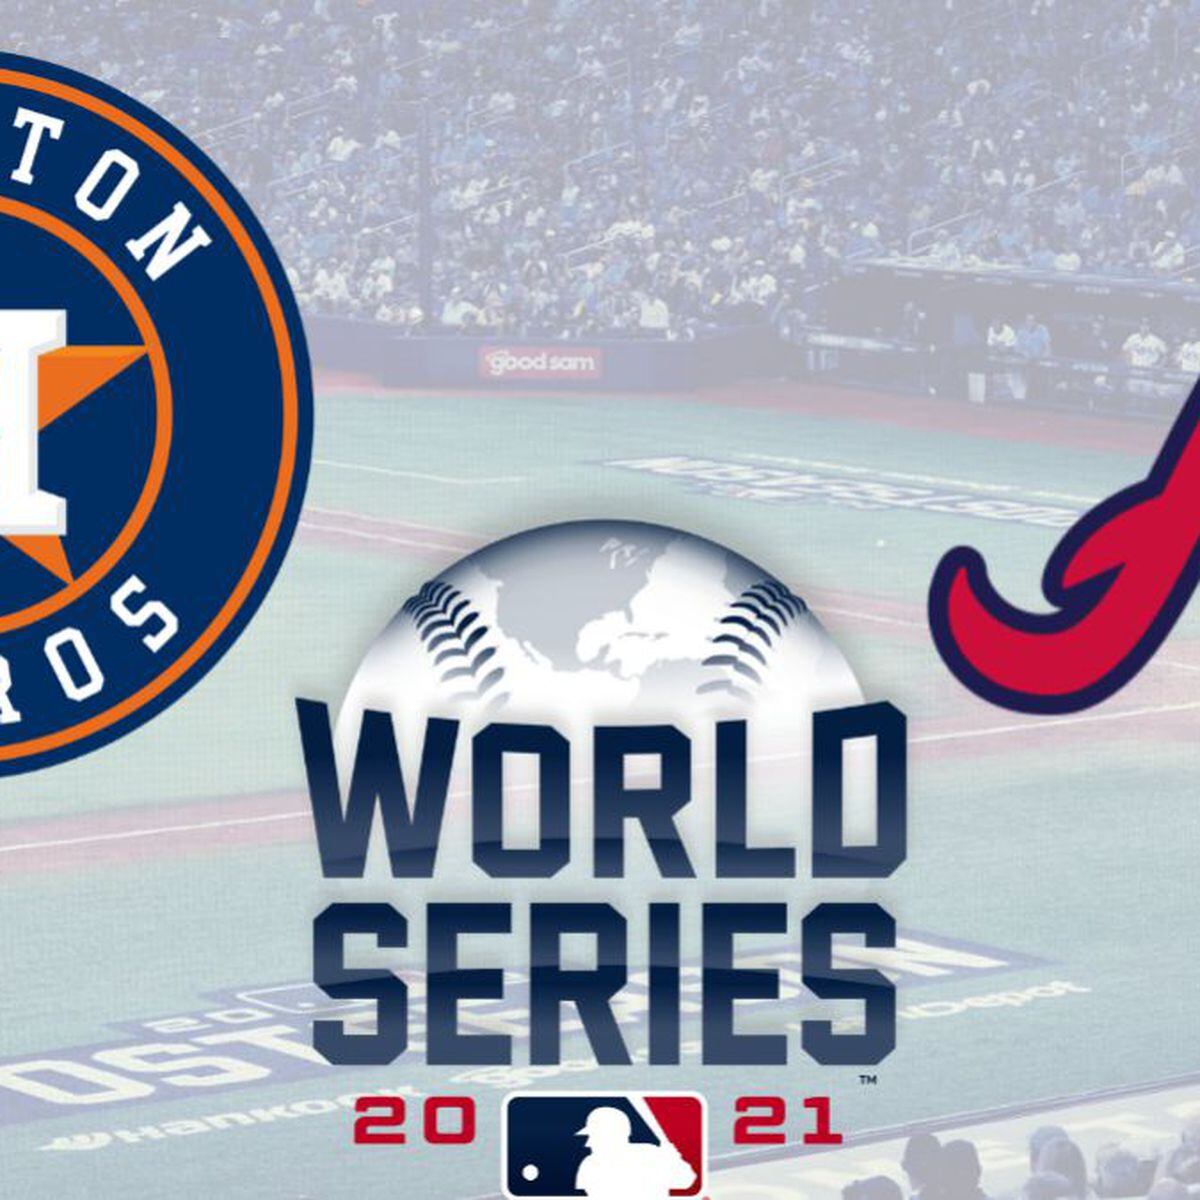 2005 MLB World Series Logo Jersey Patch Houston Astros vs. Chicago White Sox